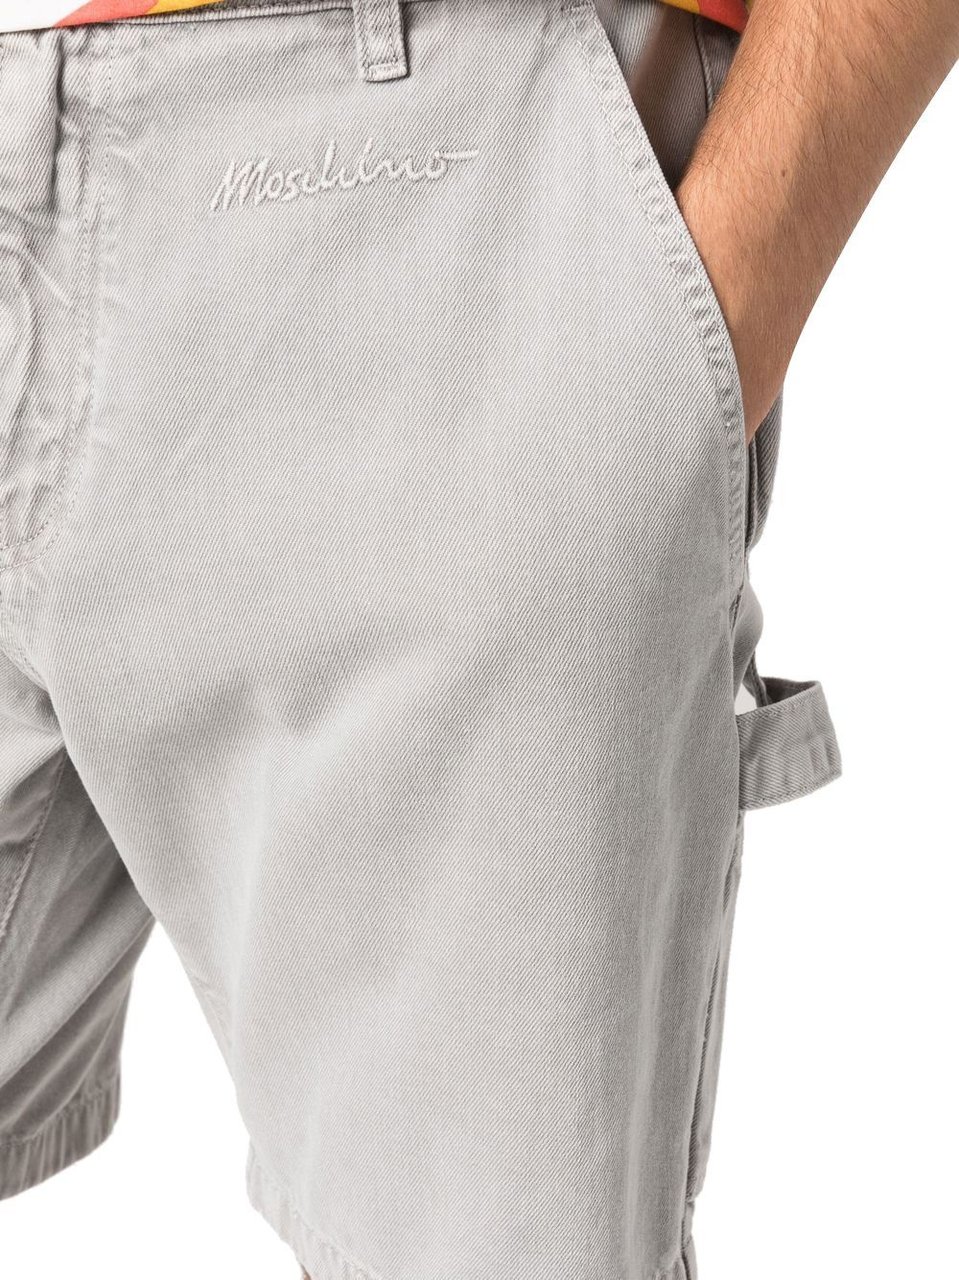 Moschino Shorts Grey Gray Grijs